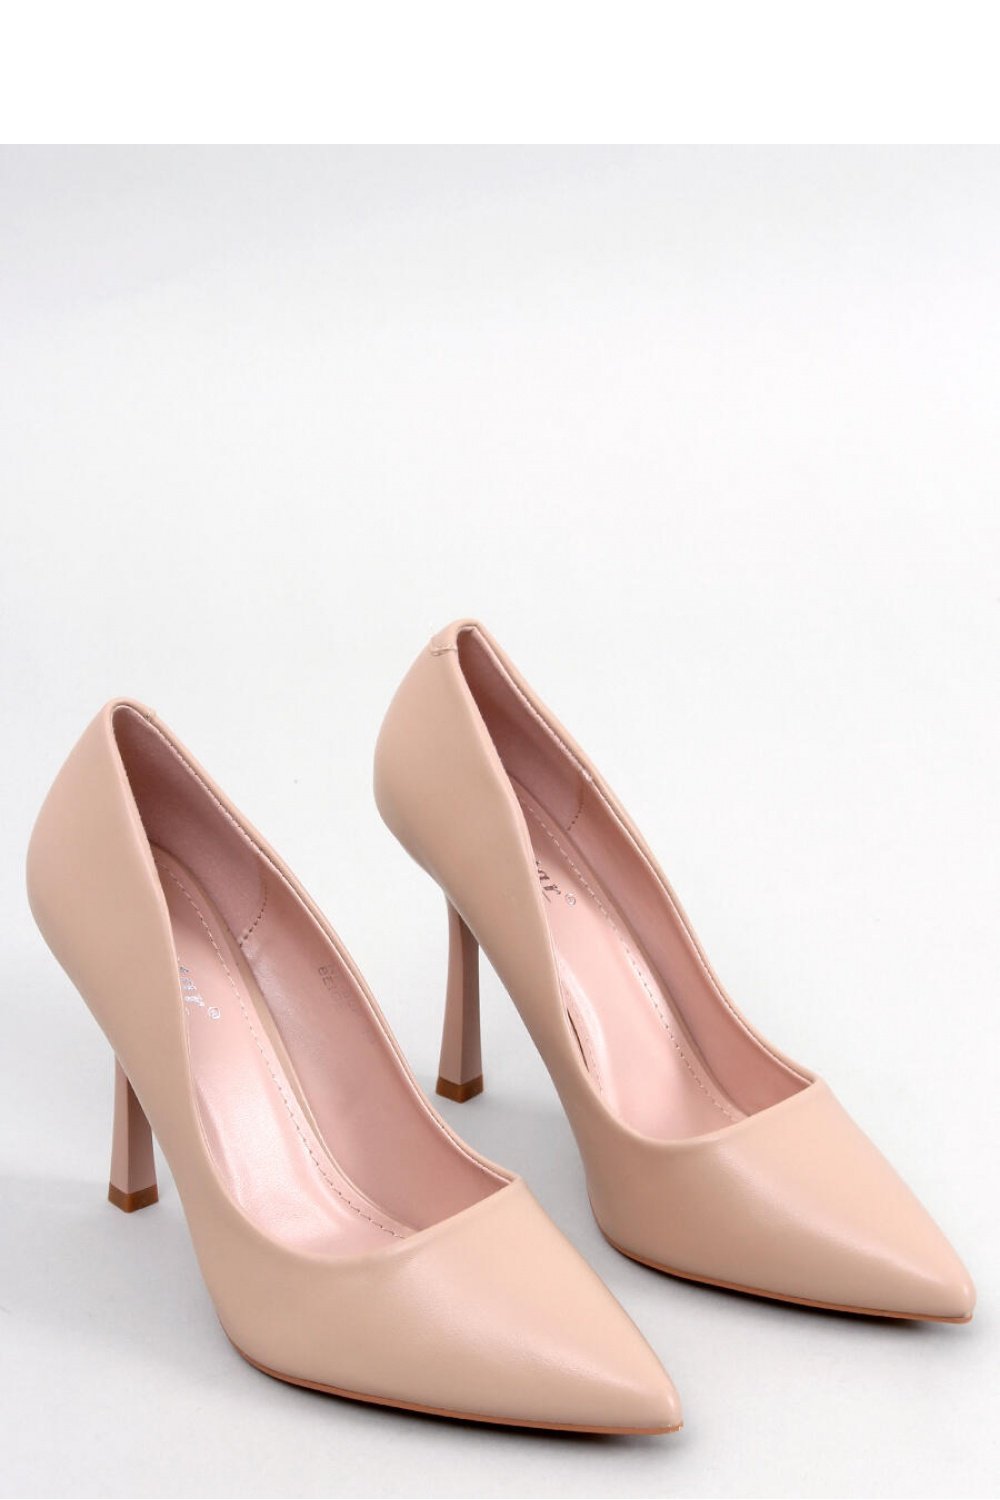 High heels model 177332 Inello Posh Styles Apparel